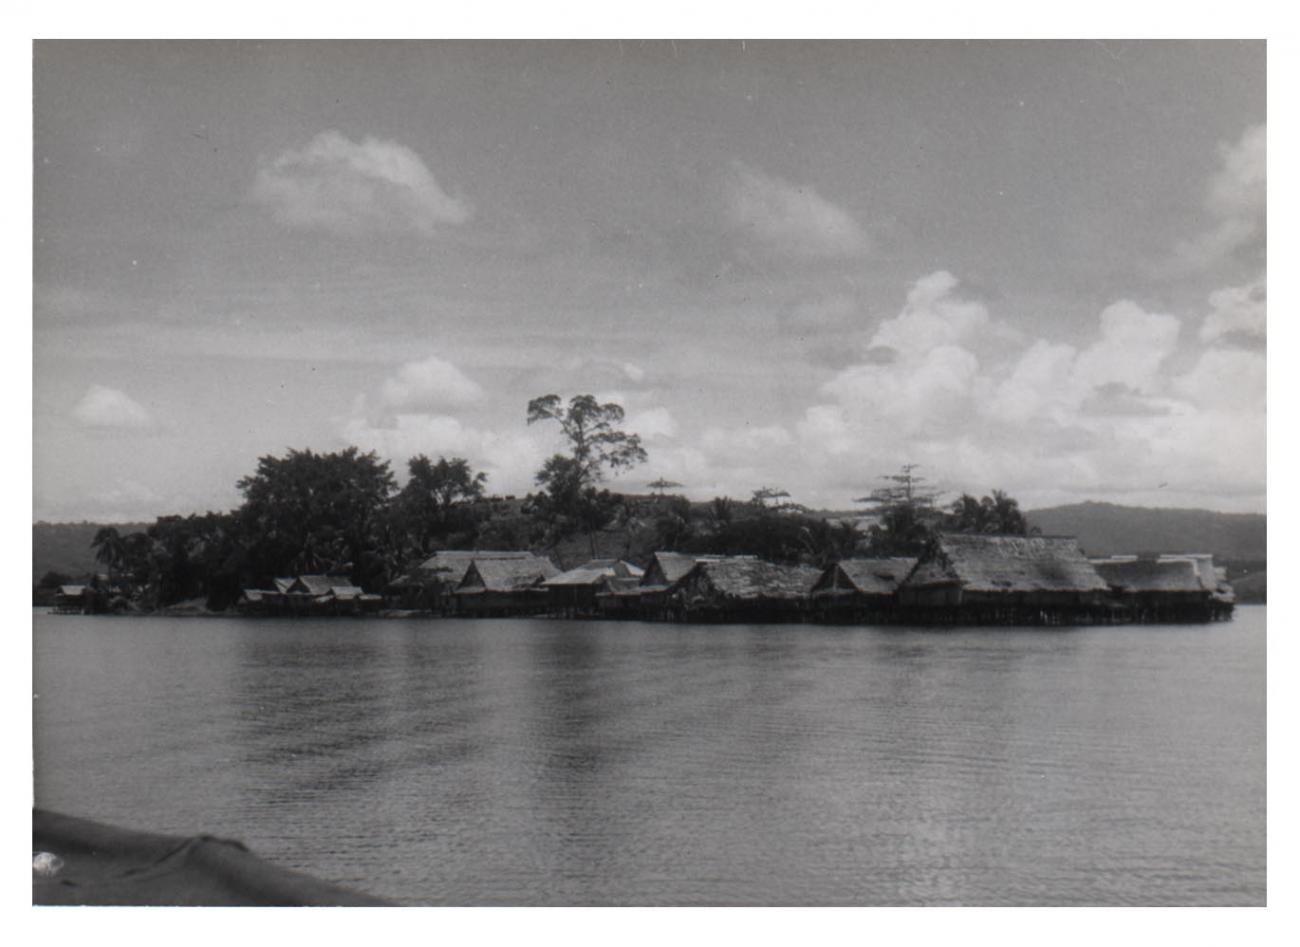 BD/54/3 - 
Kampong Ifar at coast lake Sentani, with group picture of chaplain?
